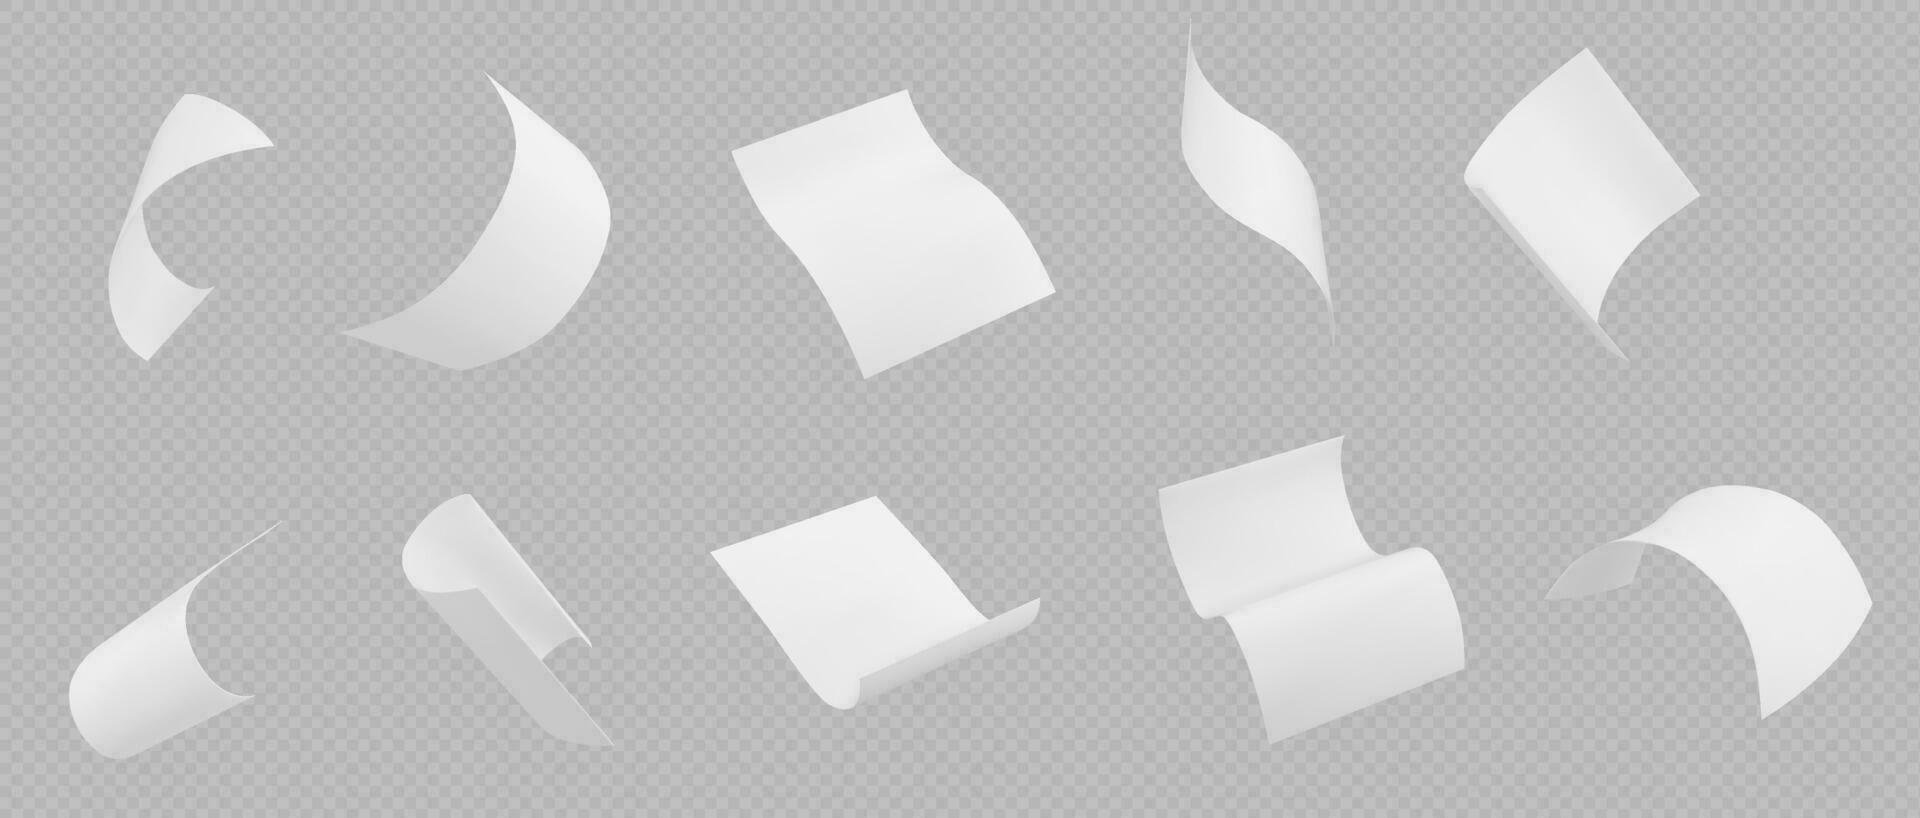 vlieg wit papier vel, vallen document bladzijde vector